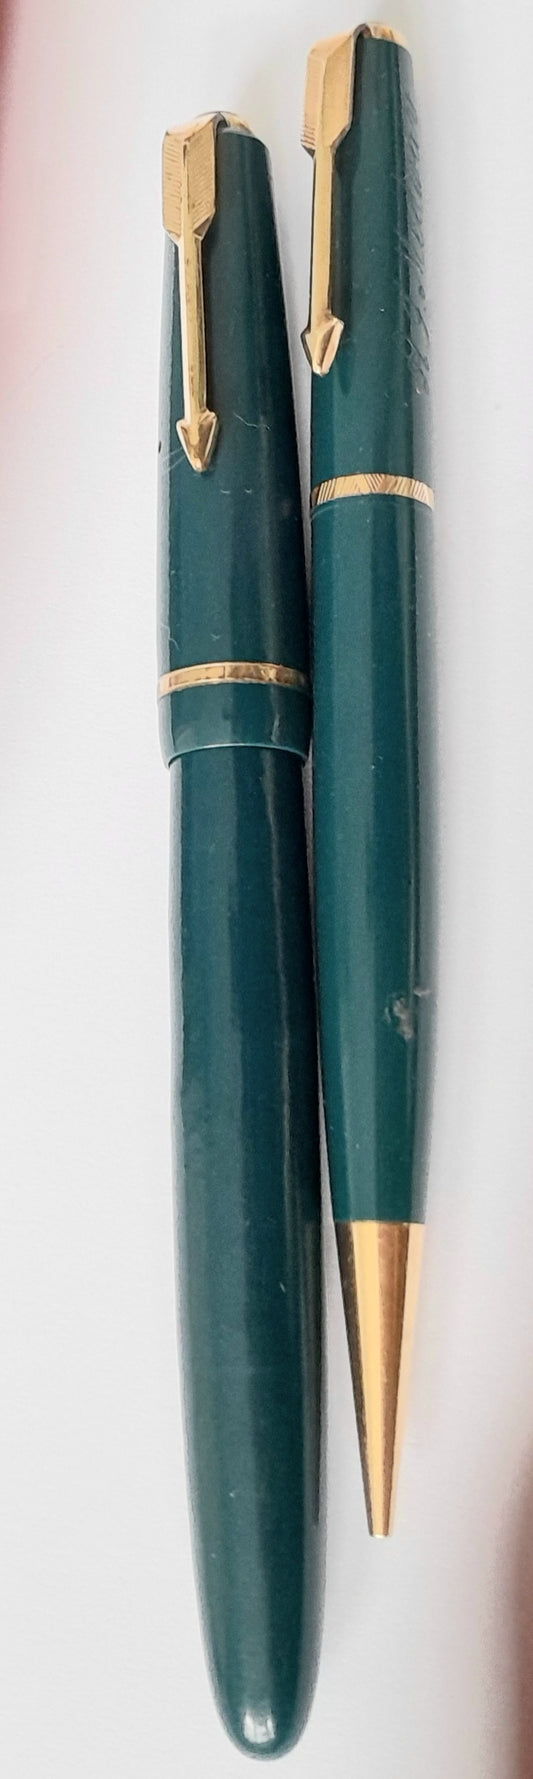 Parker Junior Fountain Pen  and Pencil Green body